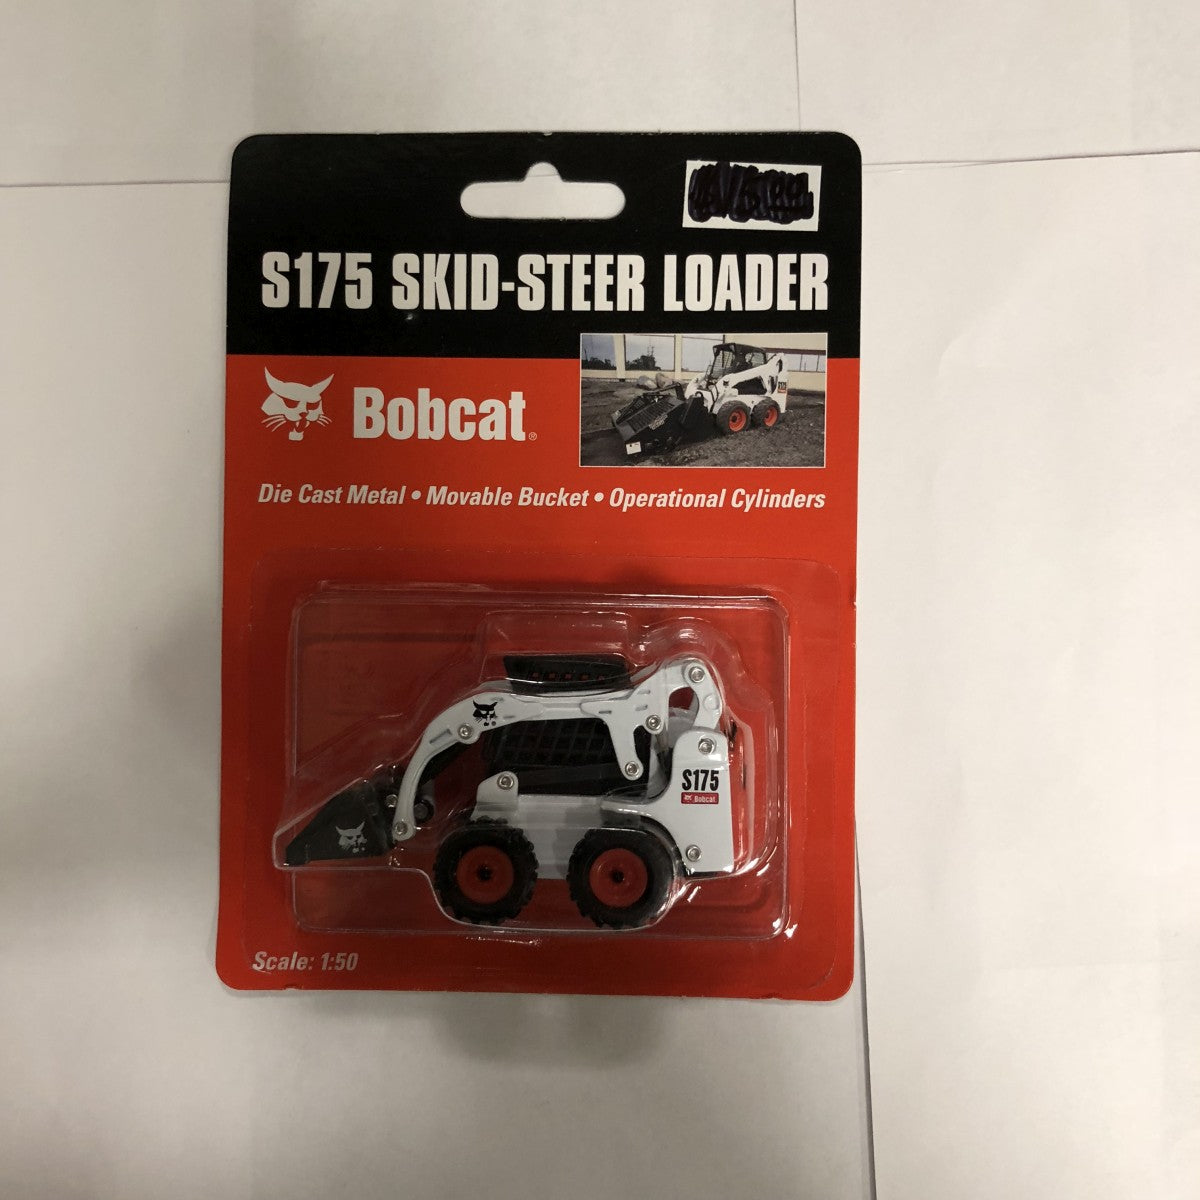 Bobcat 6988107 S175 Skid-Steer Loader 1:50th